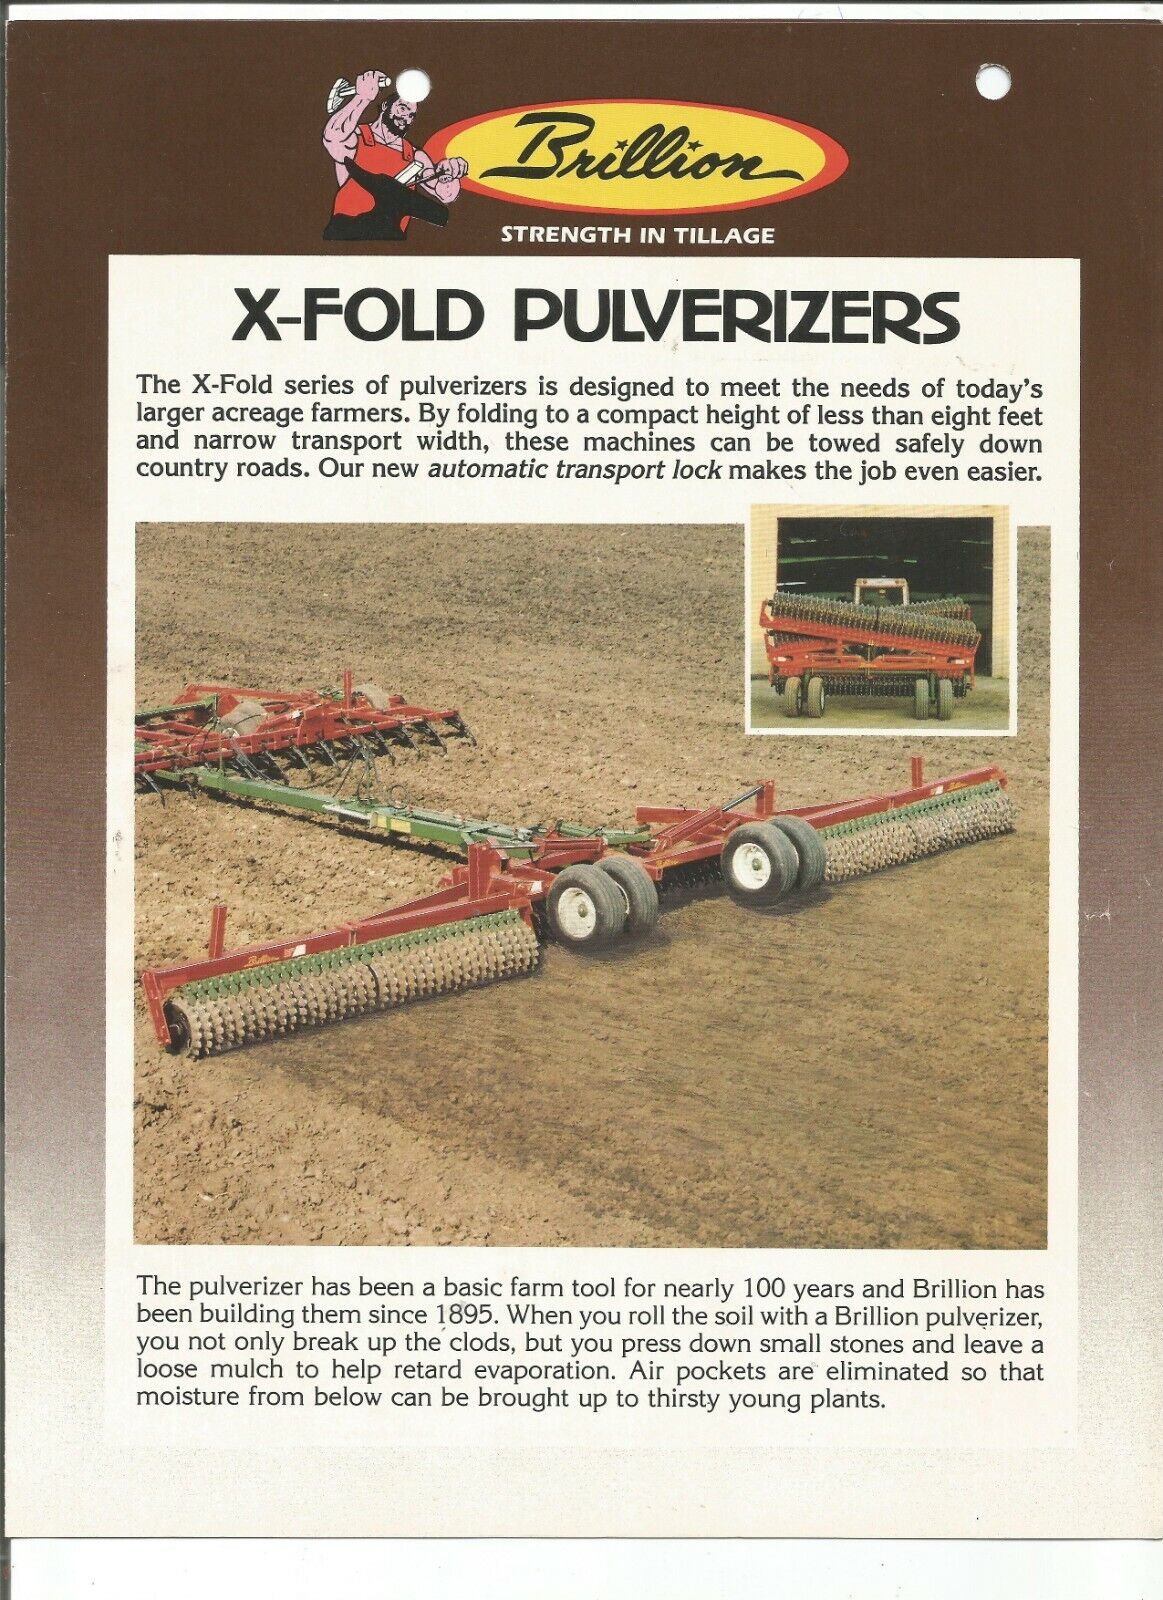 Original Brillion X-Fold X and XL Model Pulverizers Sales Brochure Form No. 25-P